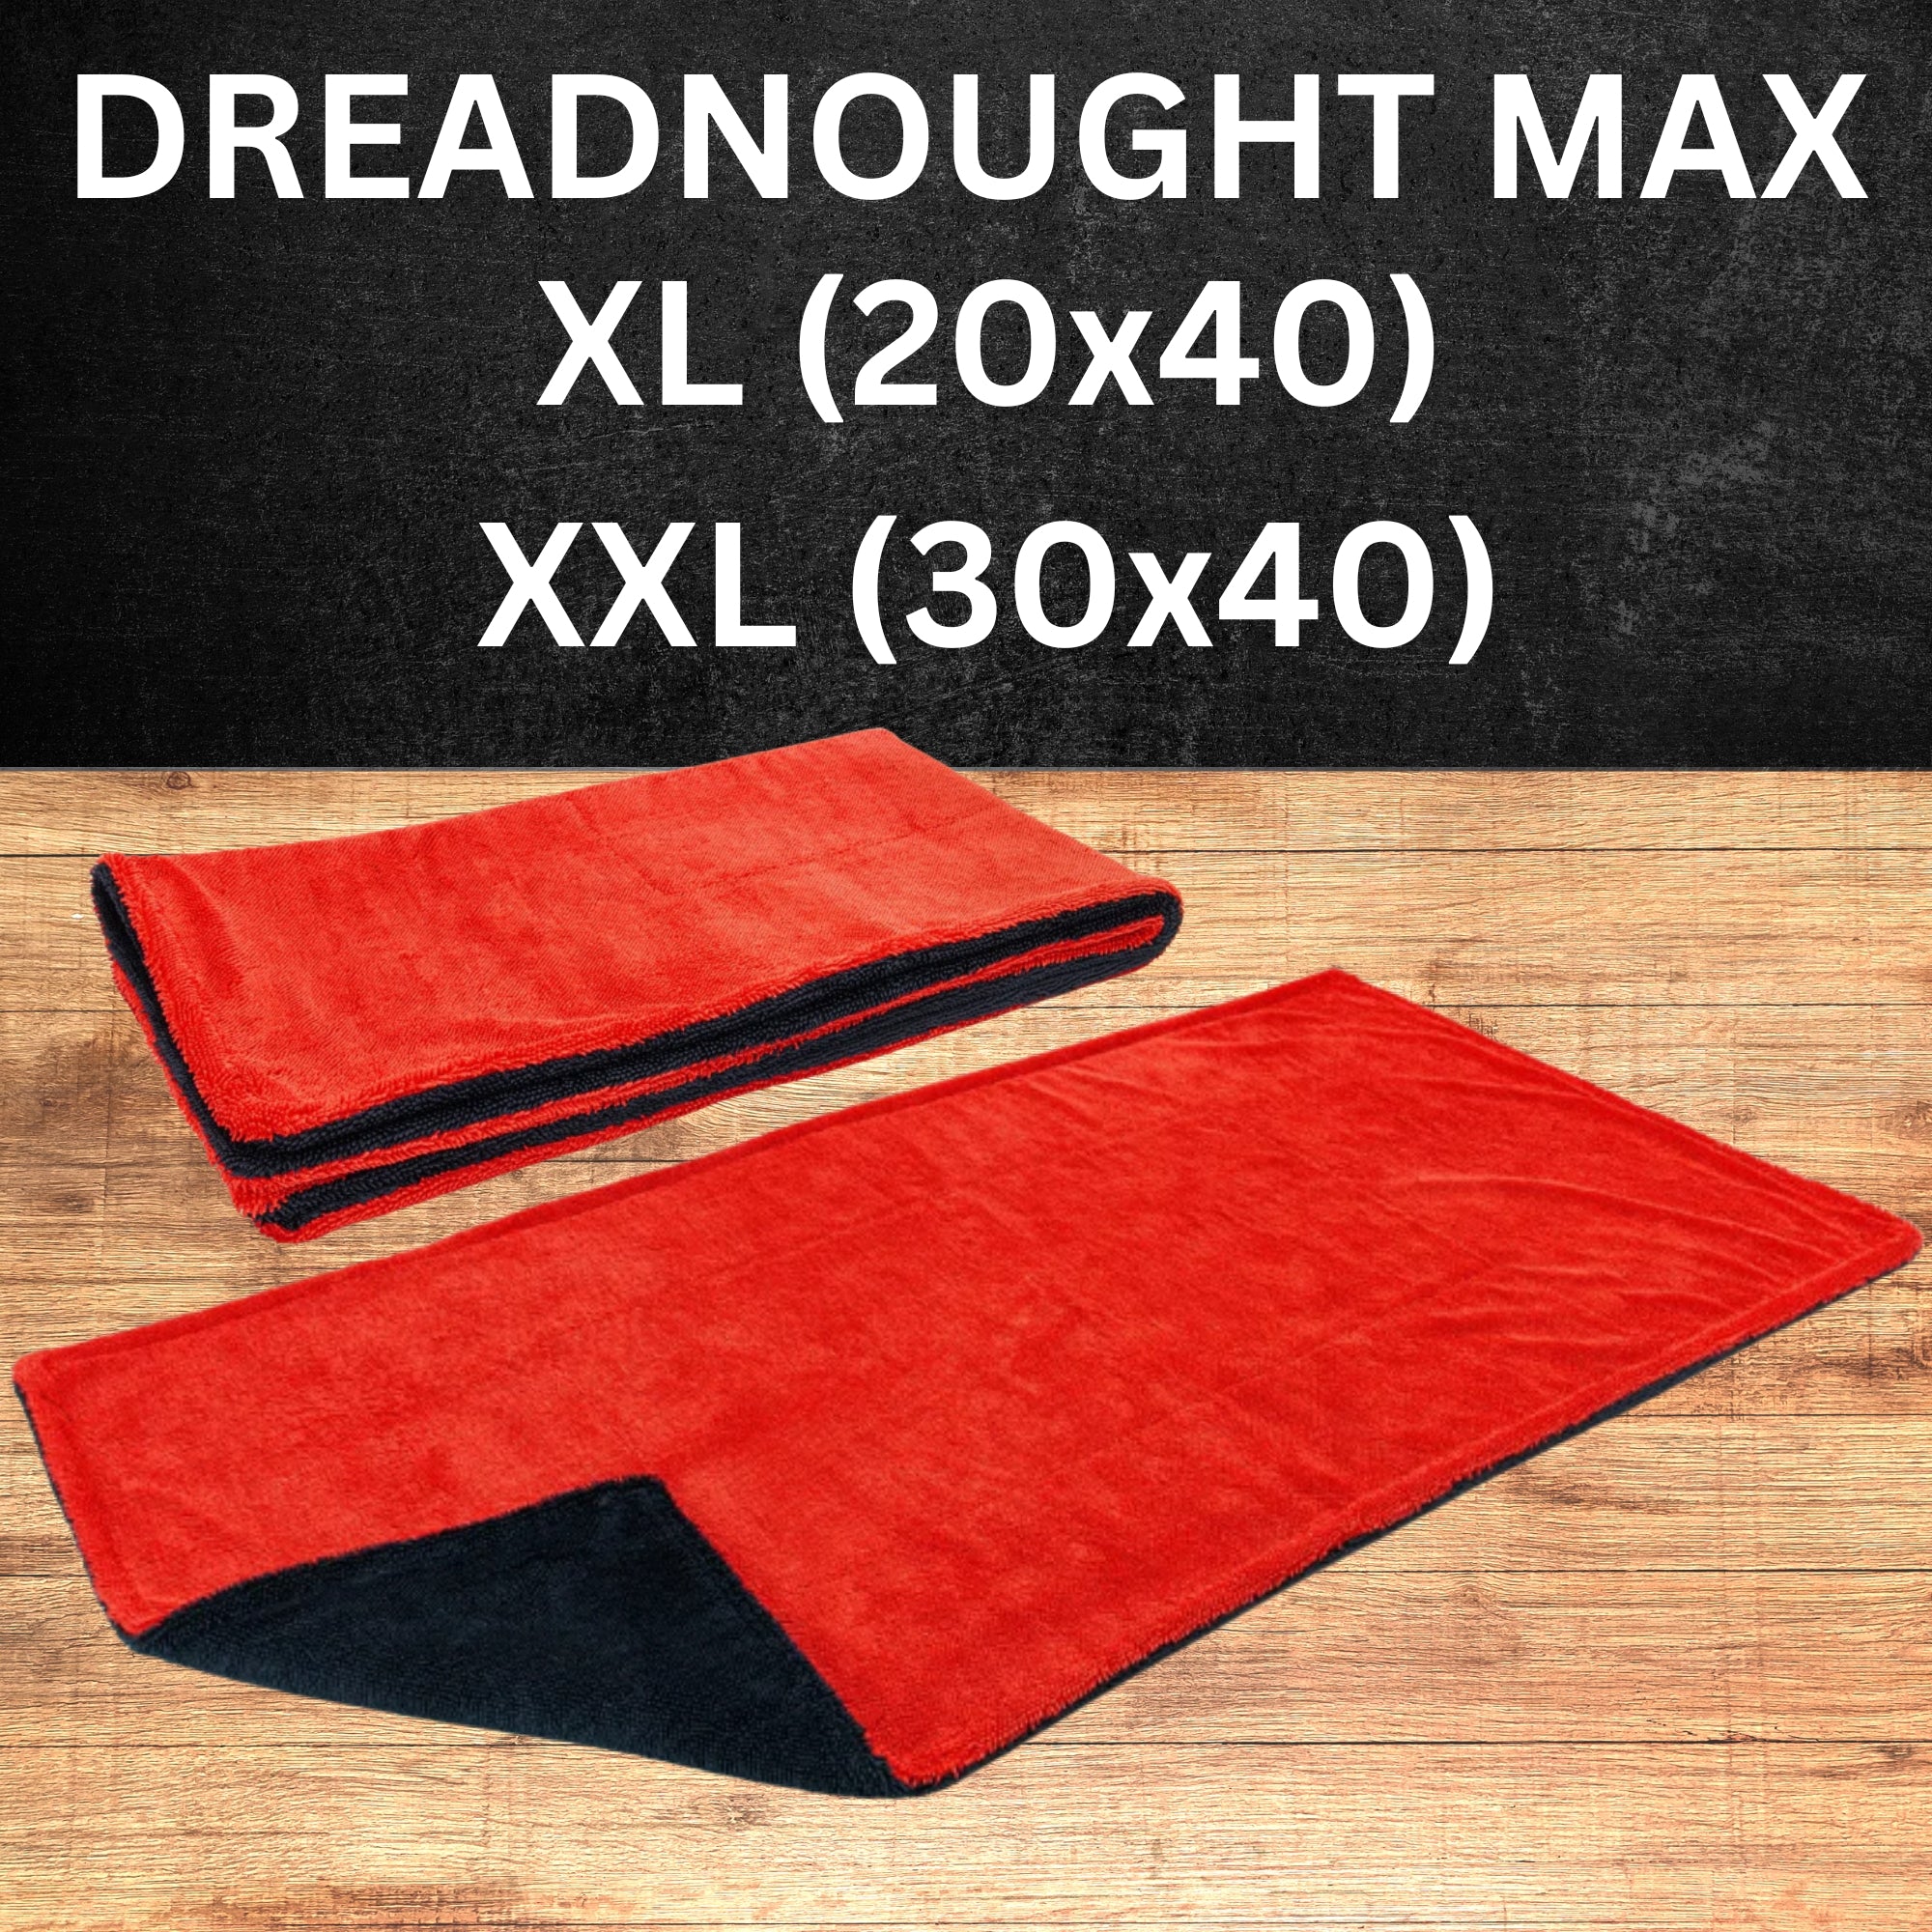 Dreadnought - Microfiber Car Drying Towel (20 in. x 30 in., 1100gsm) - 1 pack